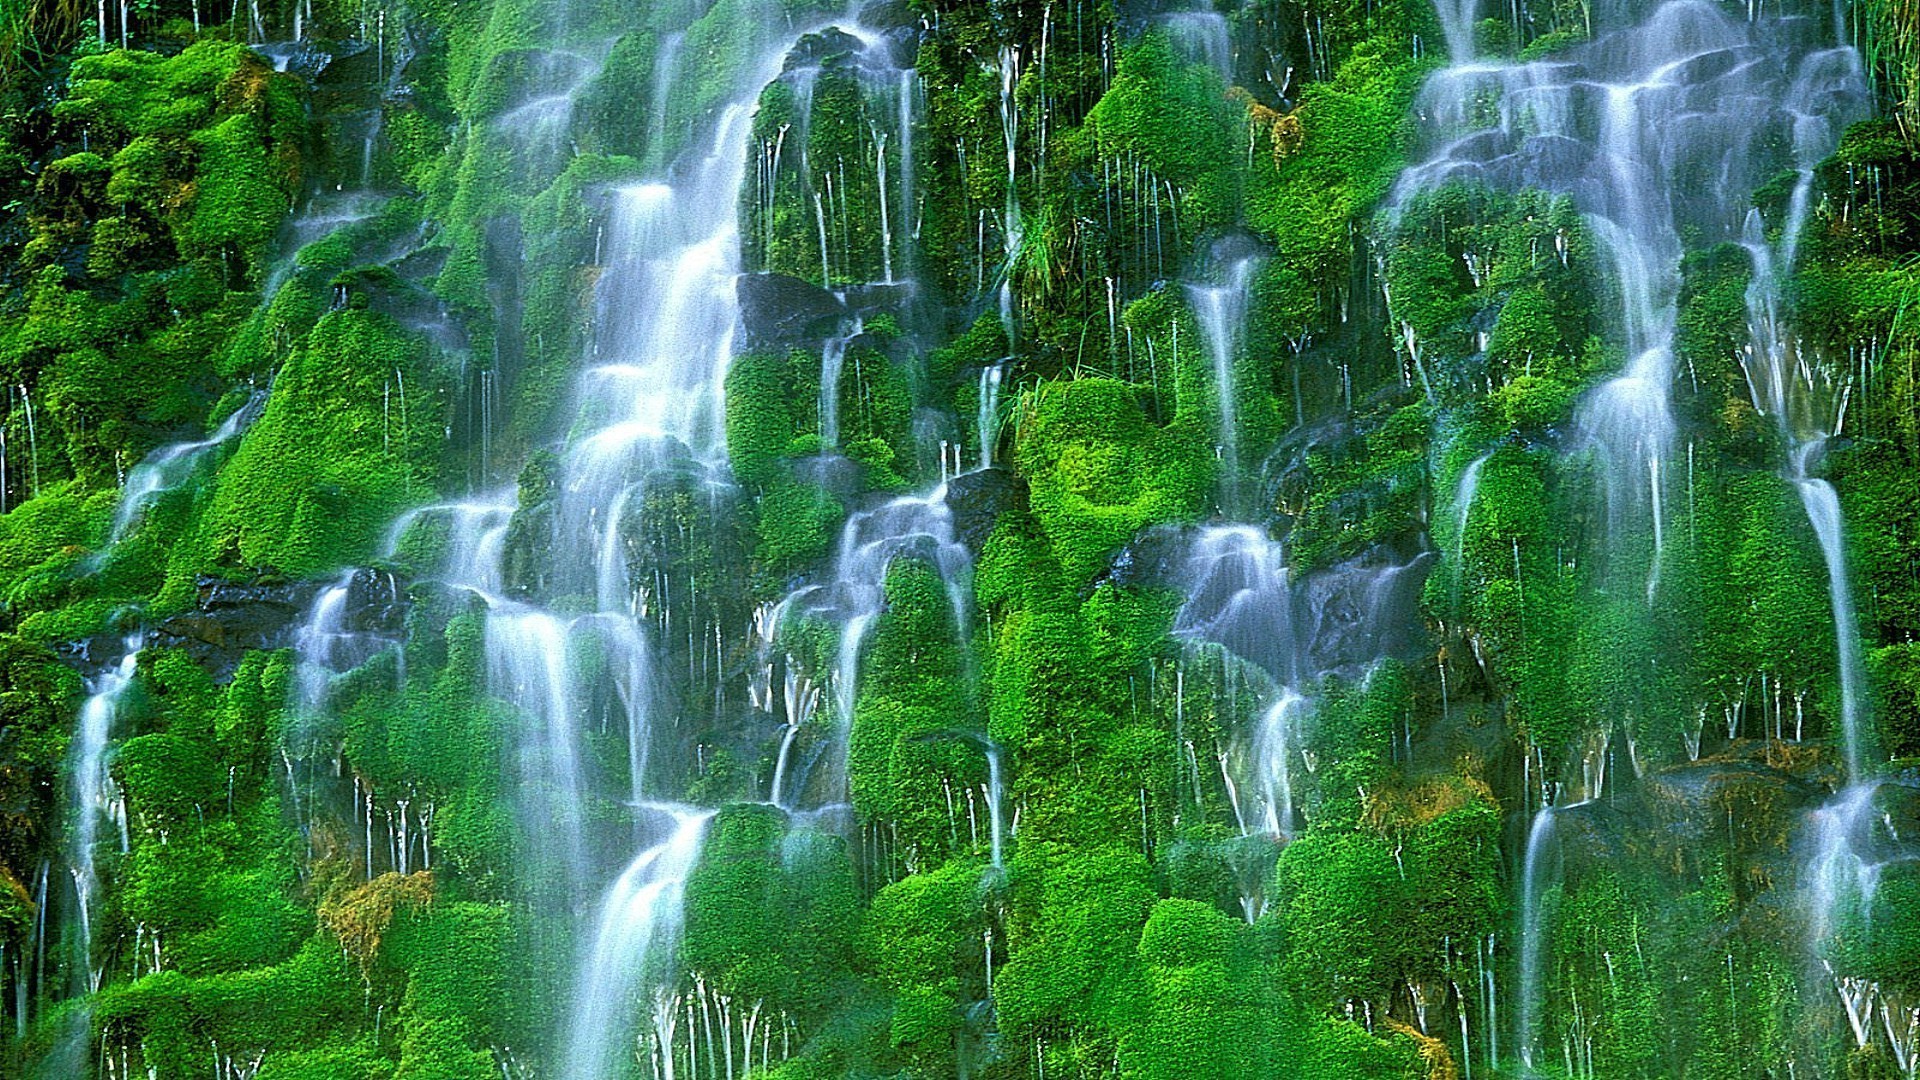 Обои на телефон живой водопад. Водопад Мосбрей, США. Живая природа водопады. Красивые водопады. Живые водопады.